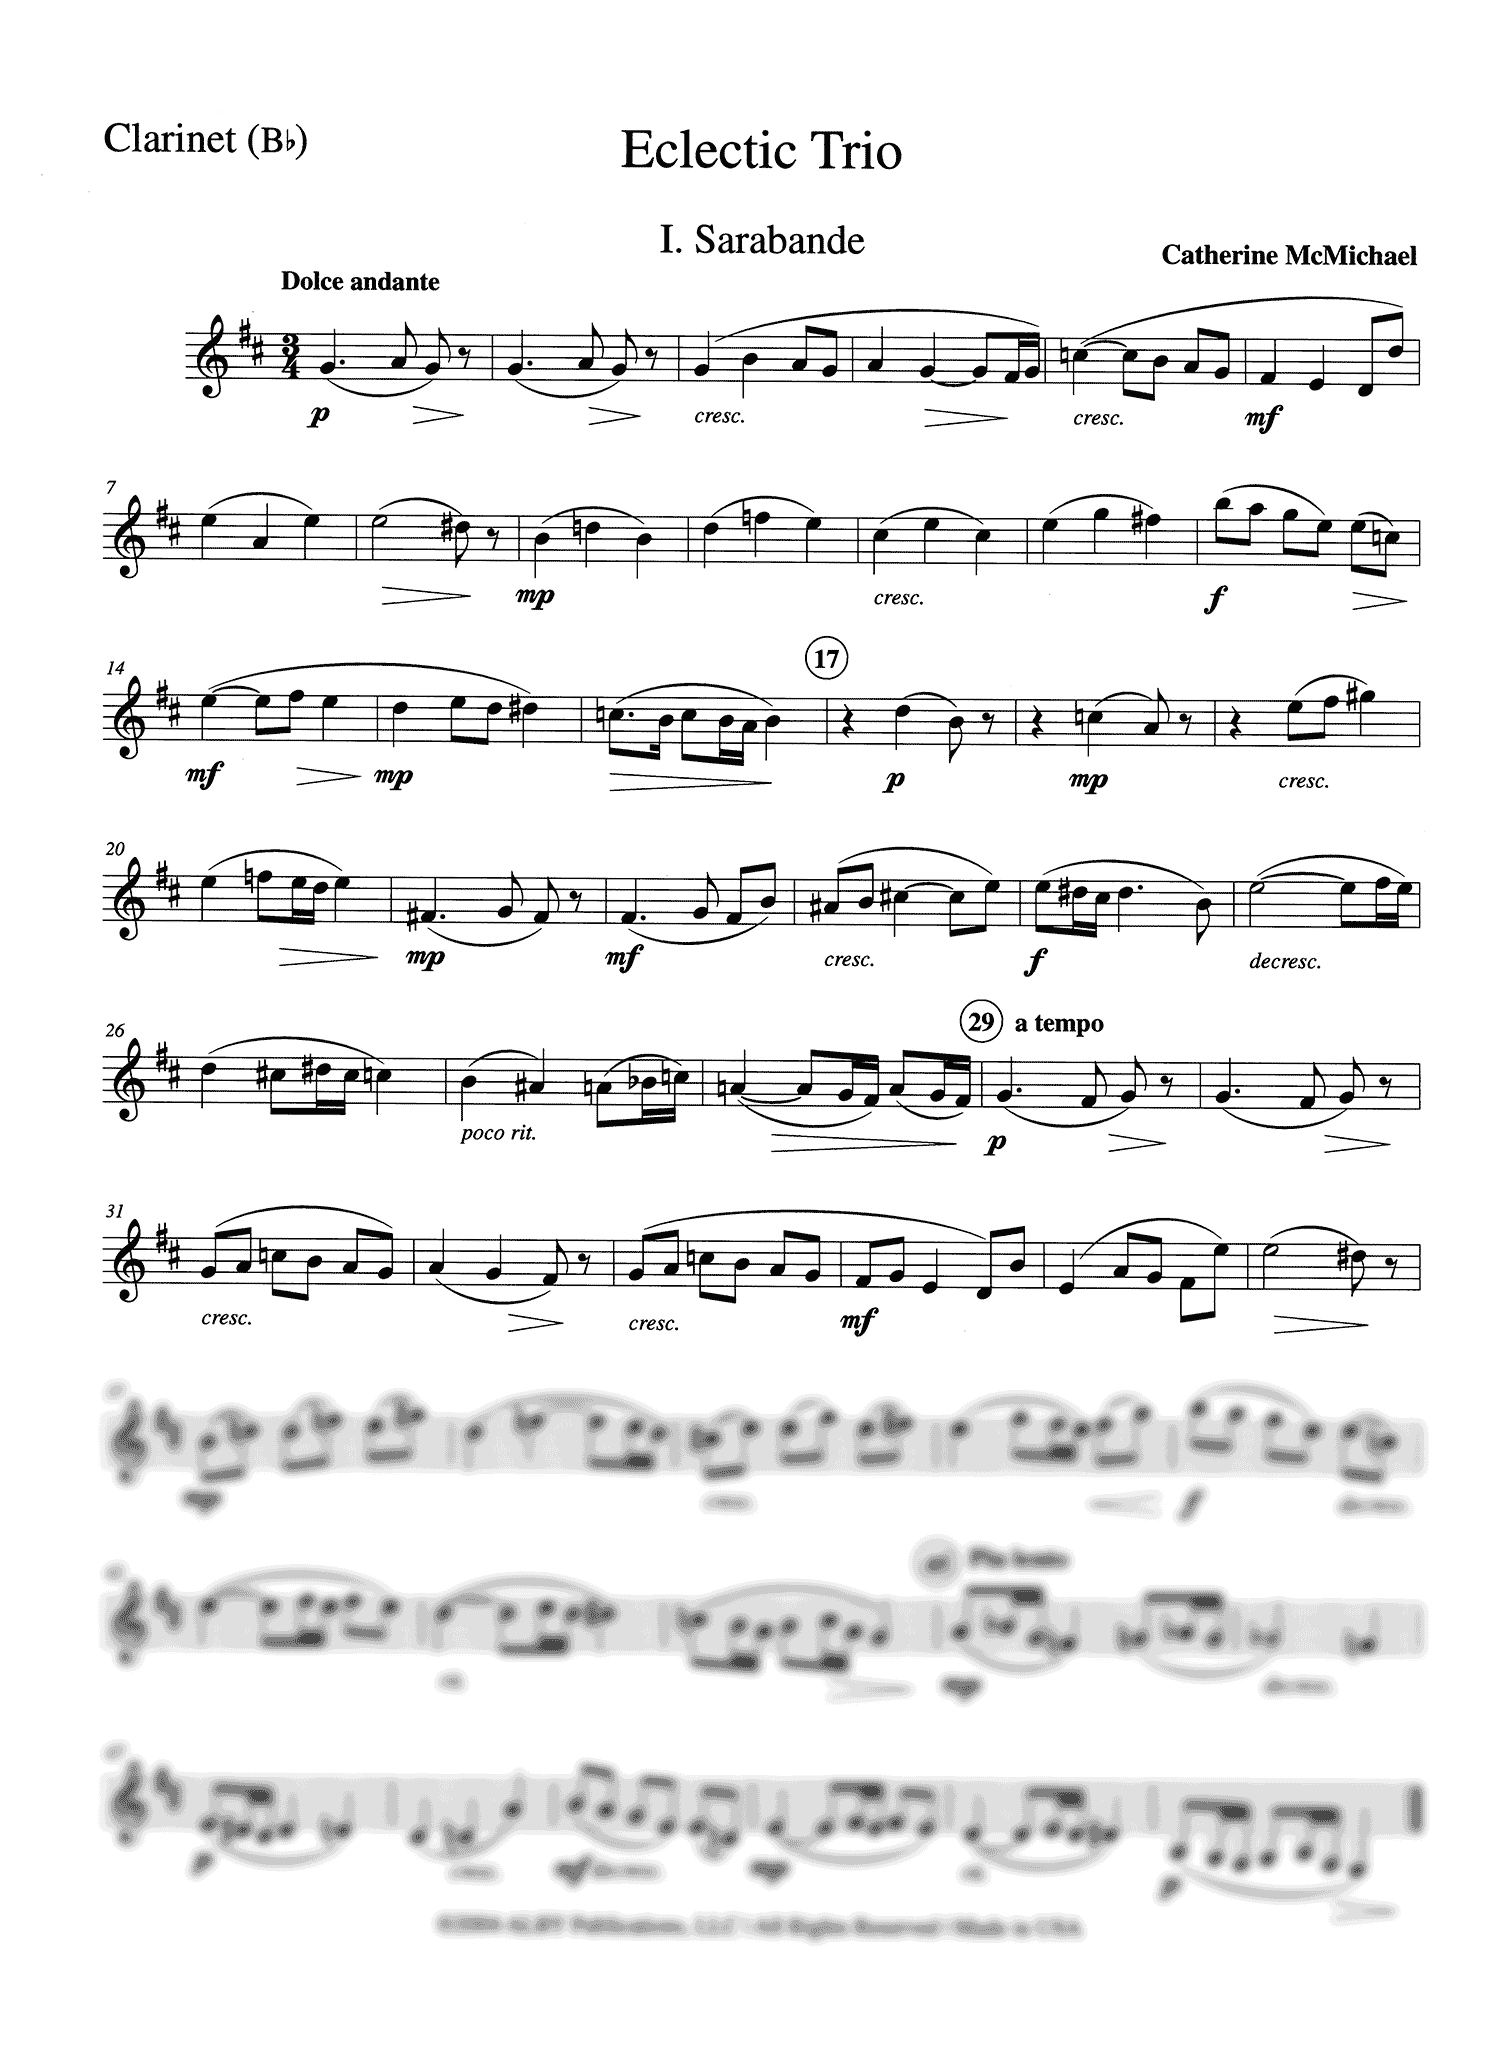 McMichael Eclectic Trio flute b-flat clarinet part